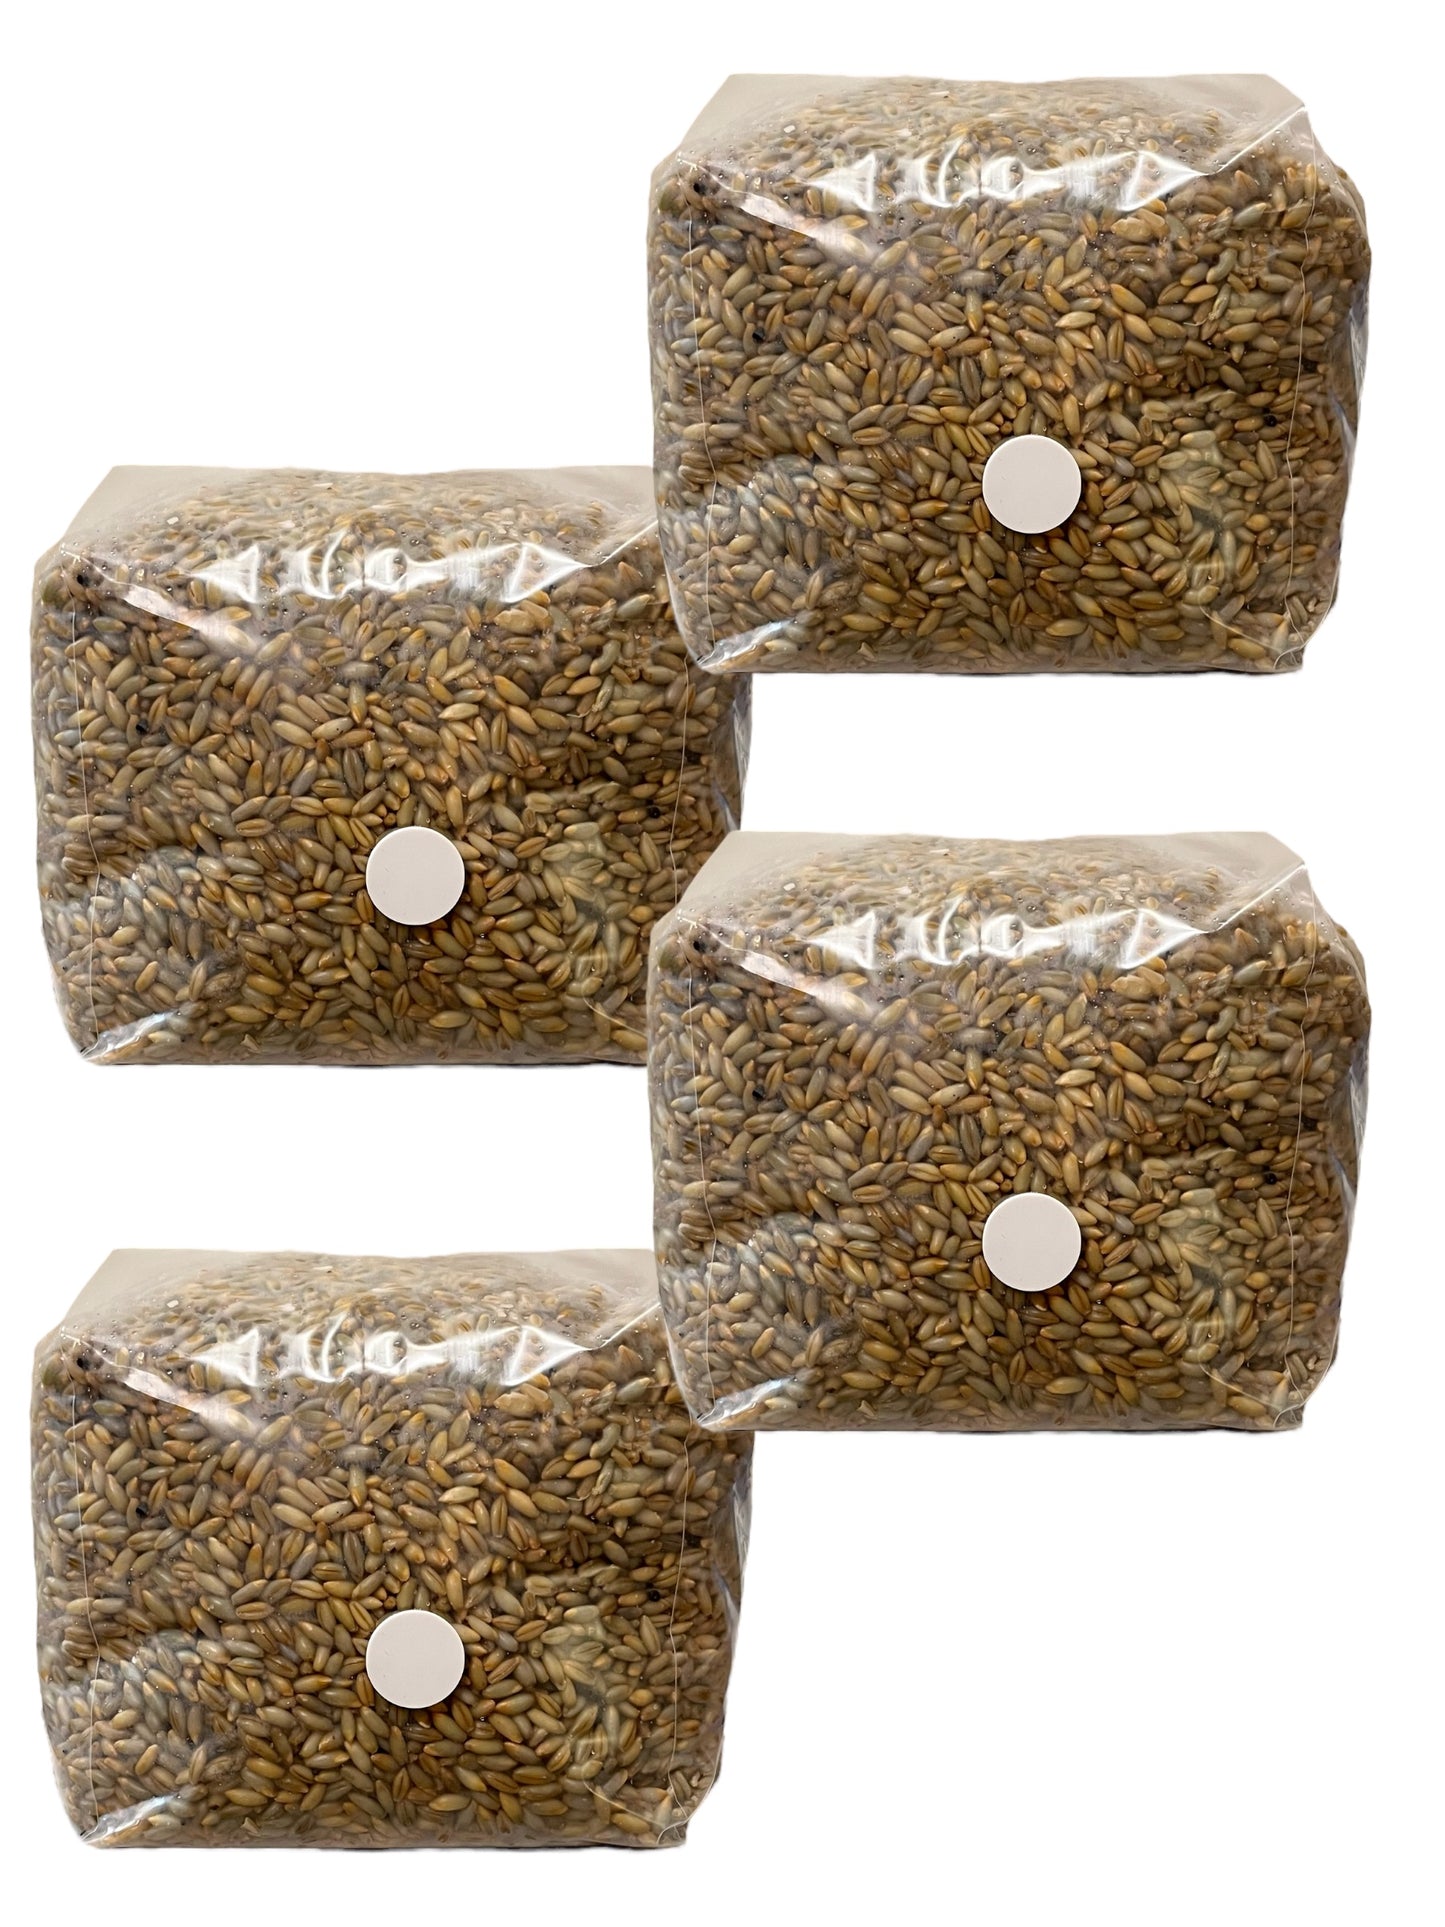 3lb Sterilized Golden Rye Grain Bags (4 Bags)